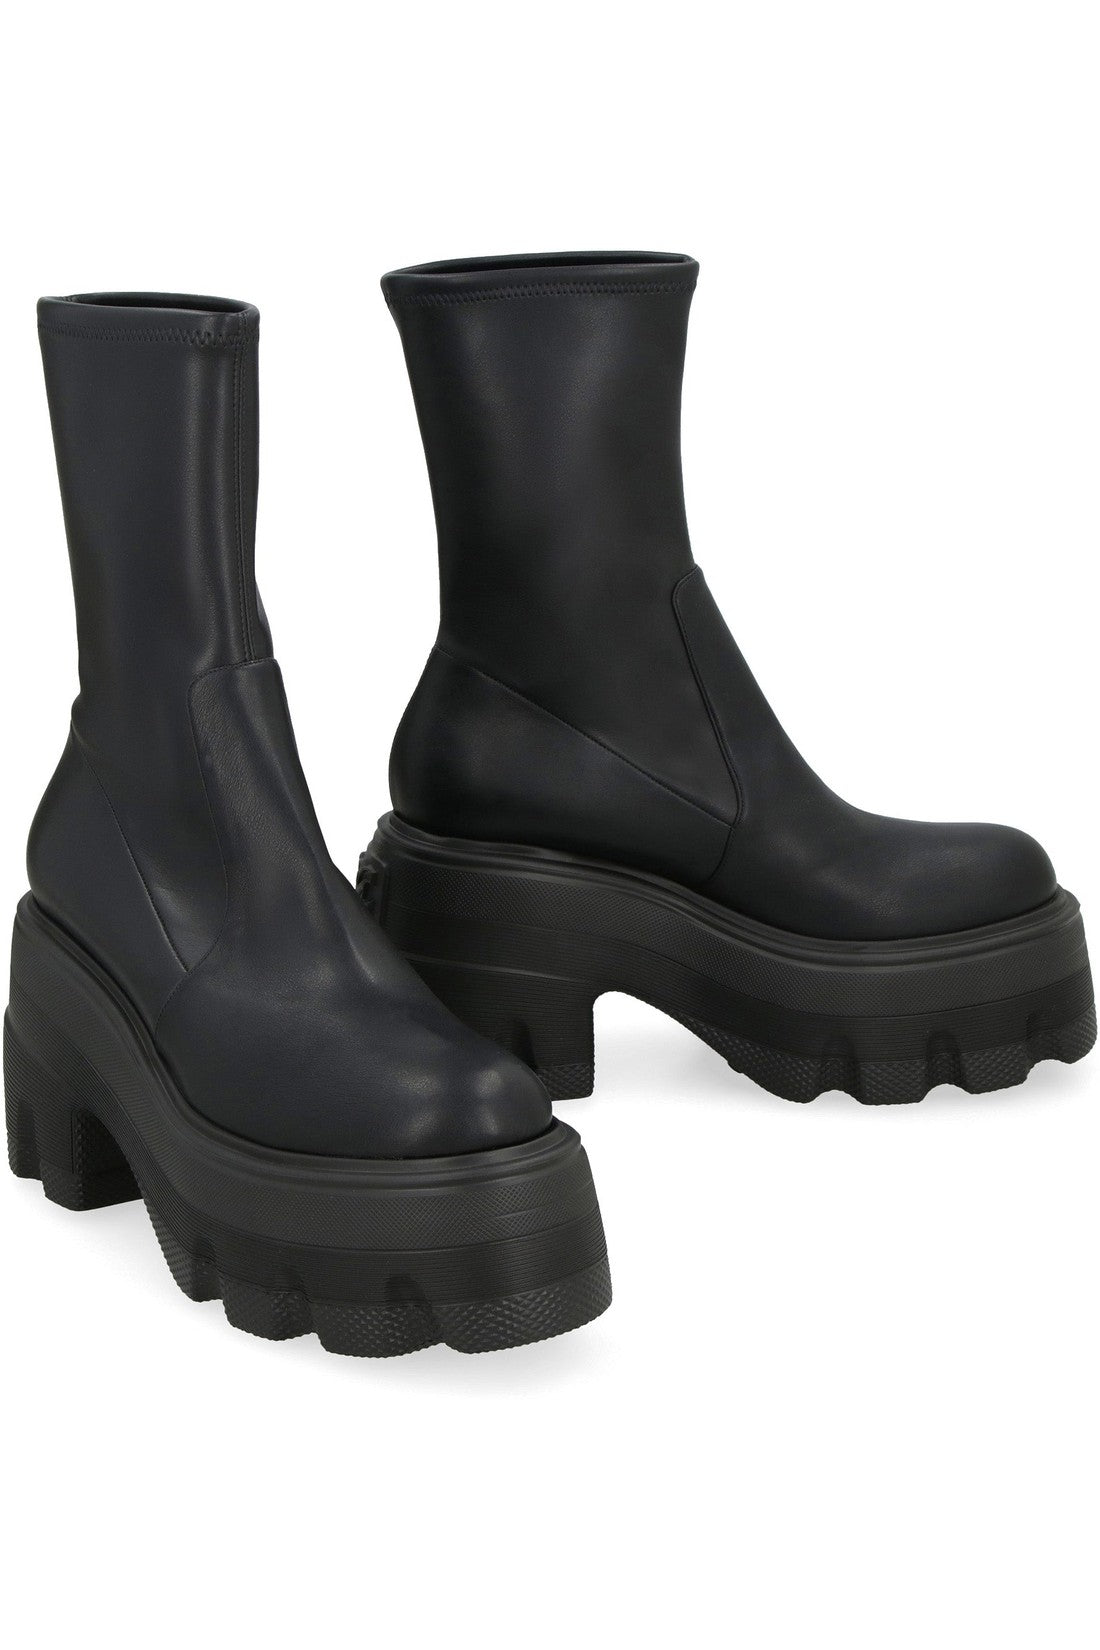 Casadei-OUTLET-SALE-Eco-leather ankle boots-ARCHIVIST